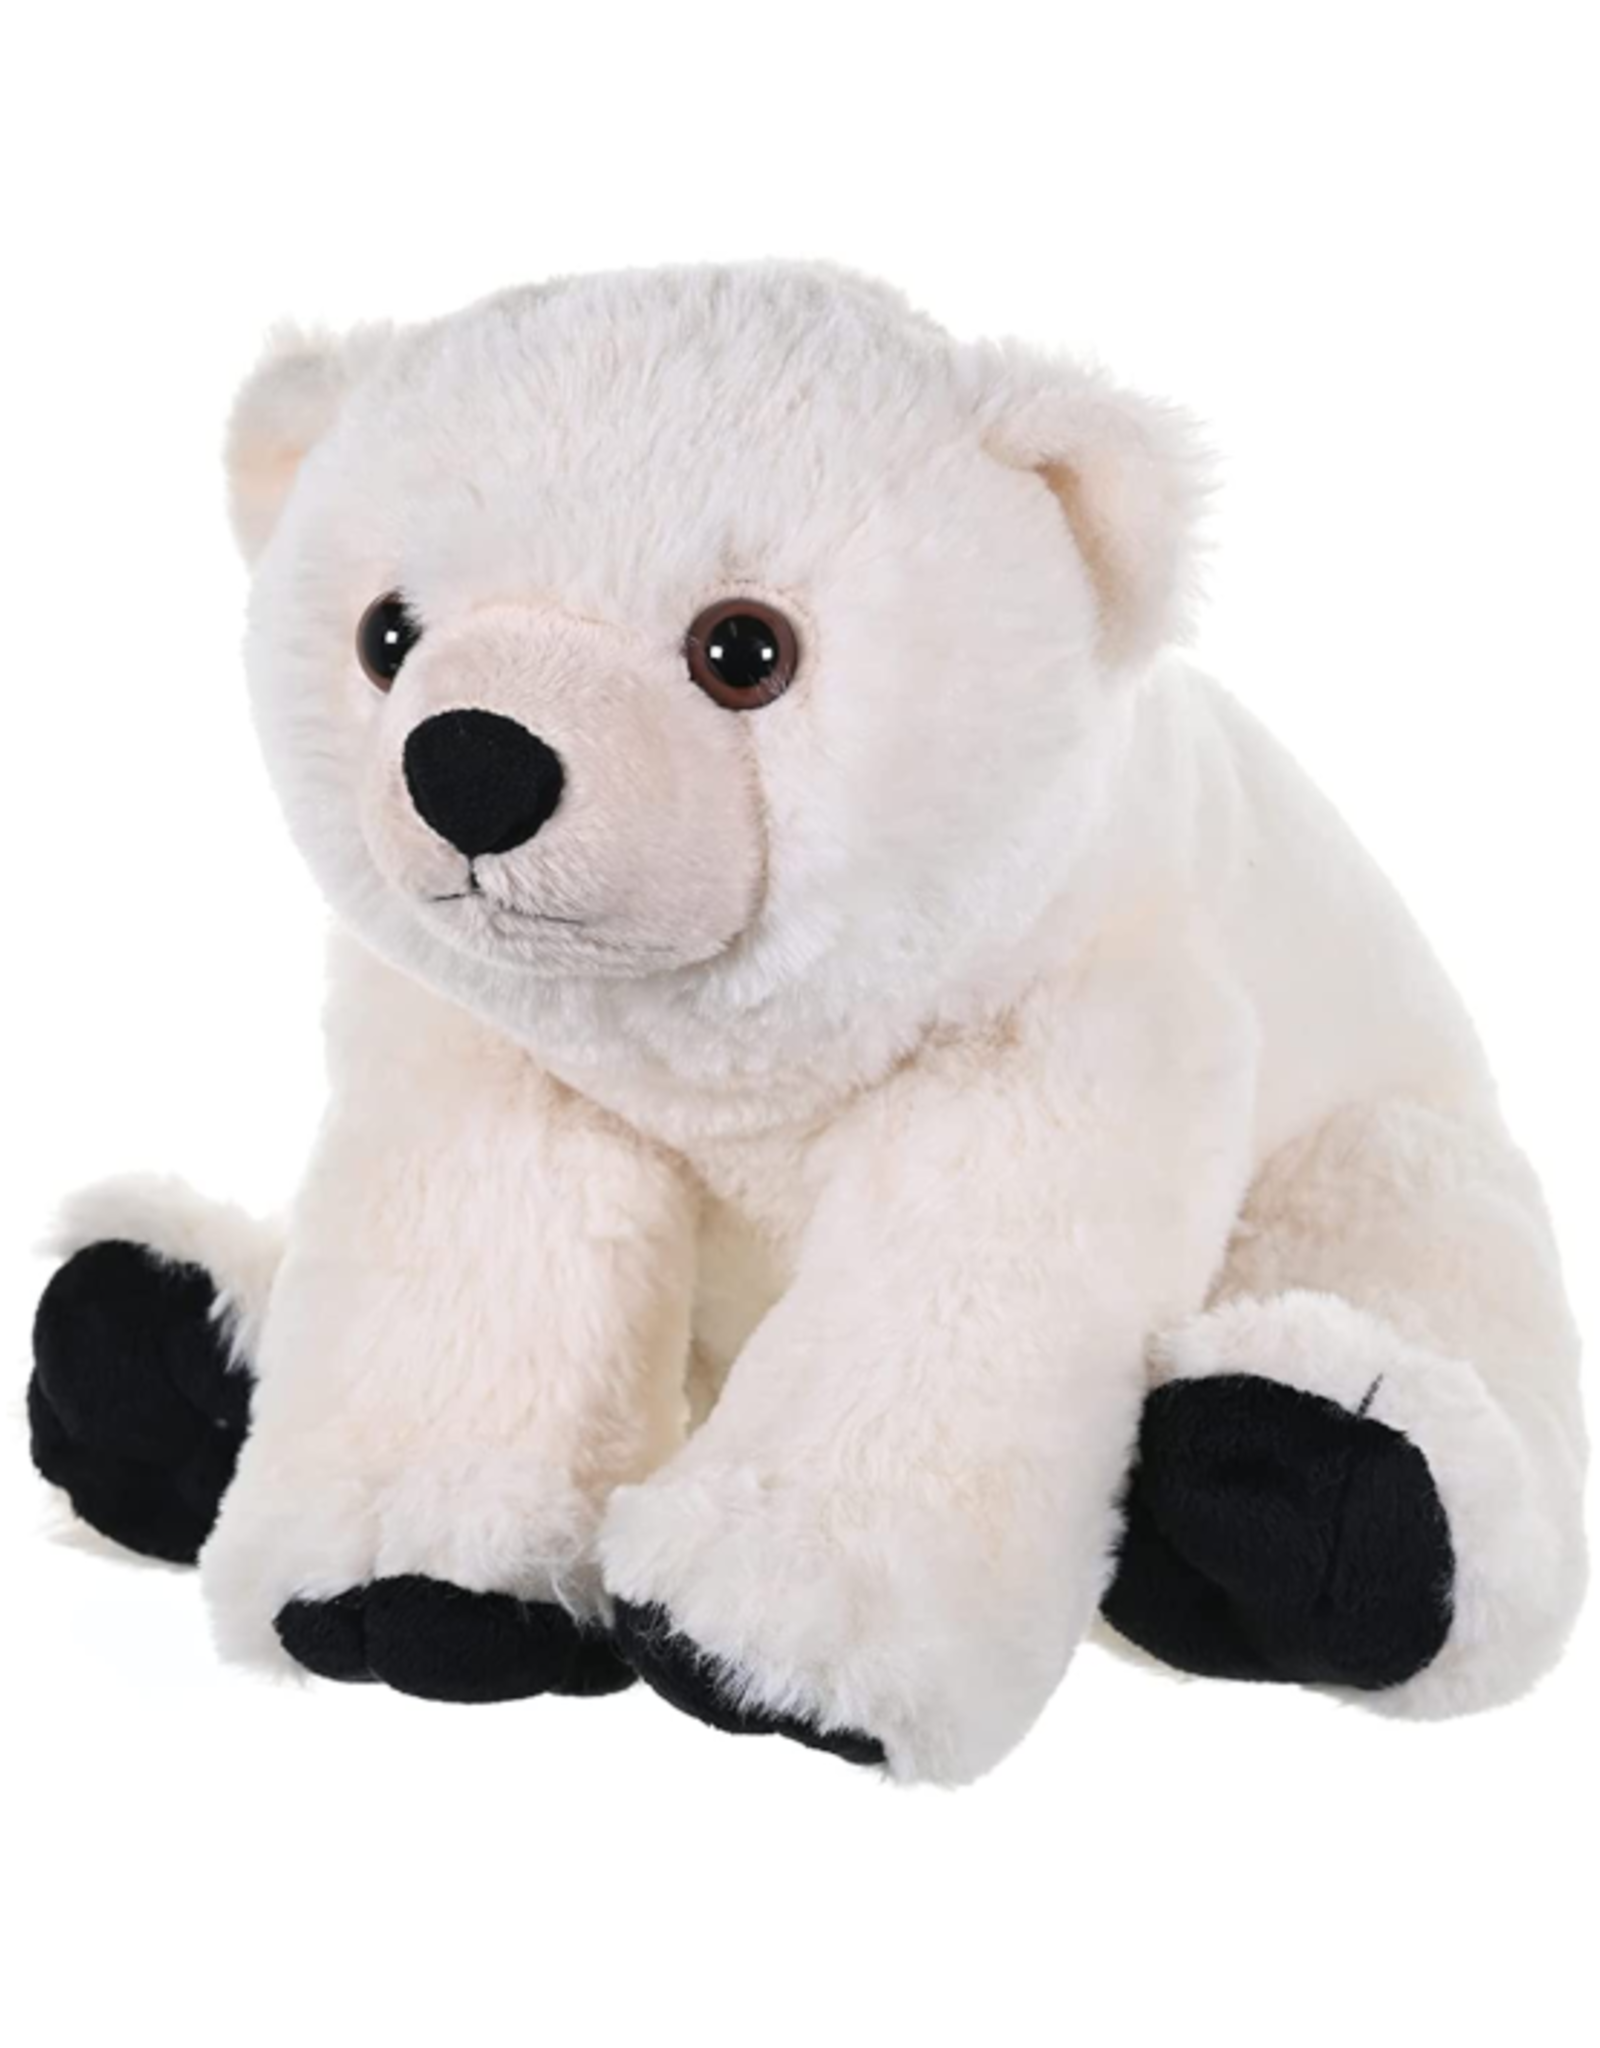 Wild Republic Wild Republic - Cuddlekins - Polar Bear Baby 12"